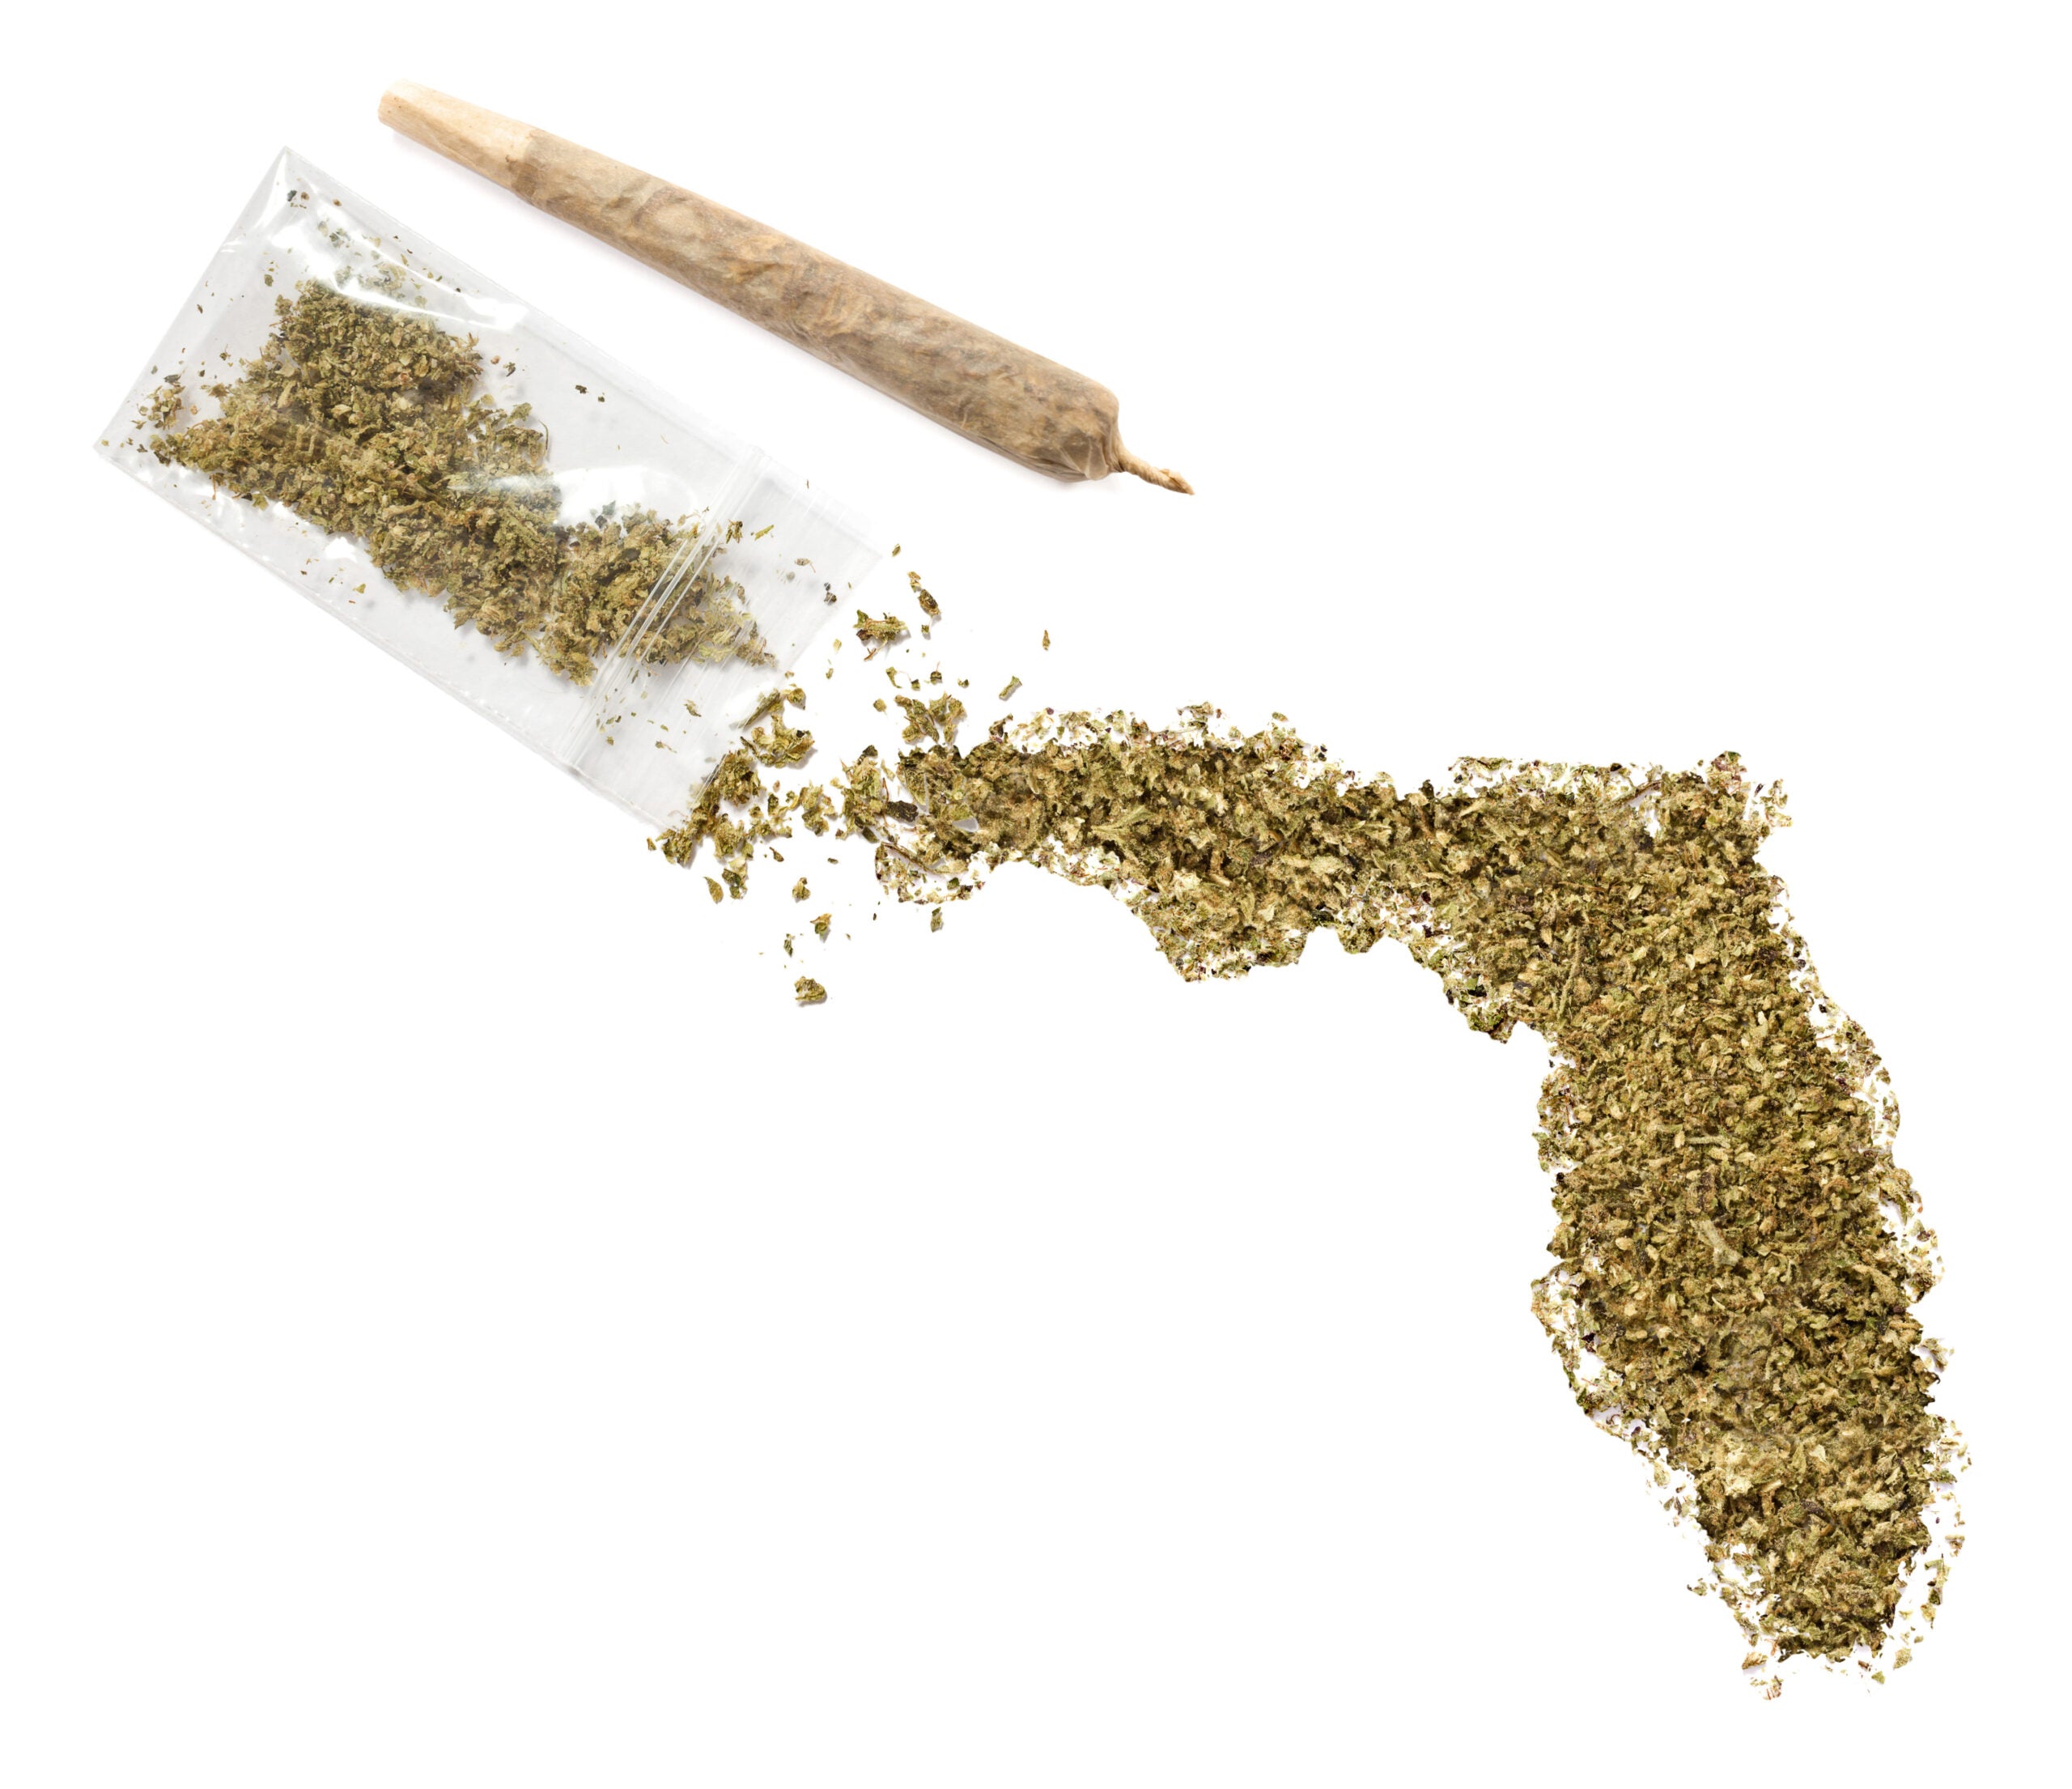 New Florida Bill Seeks Changes to Medical Marijuana Program - Marijuana Packaging